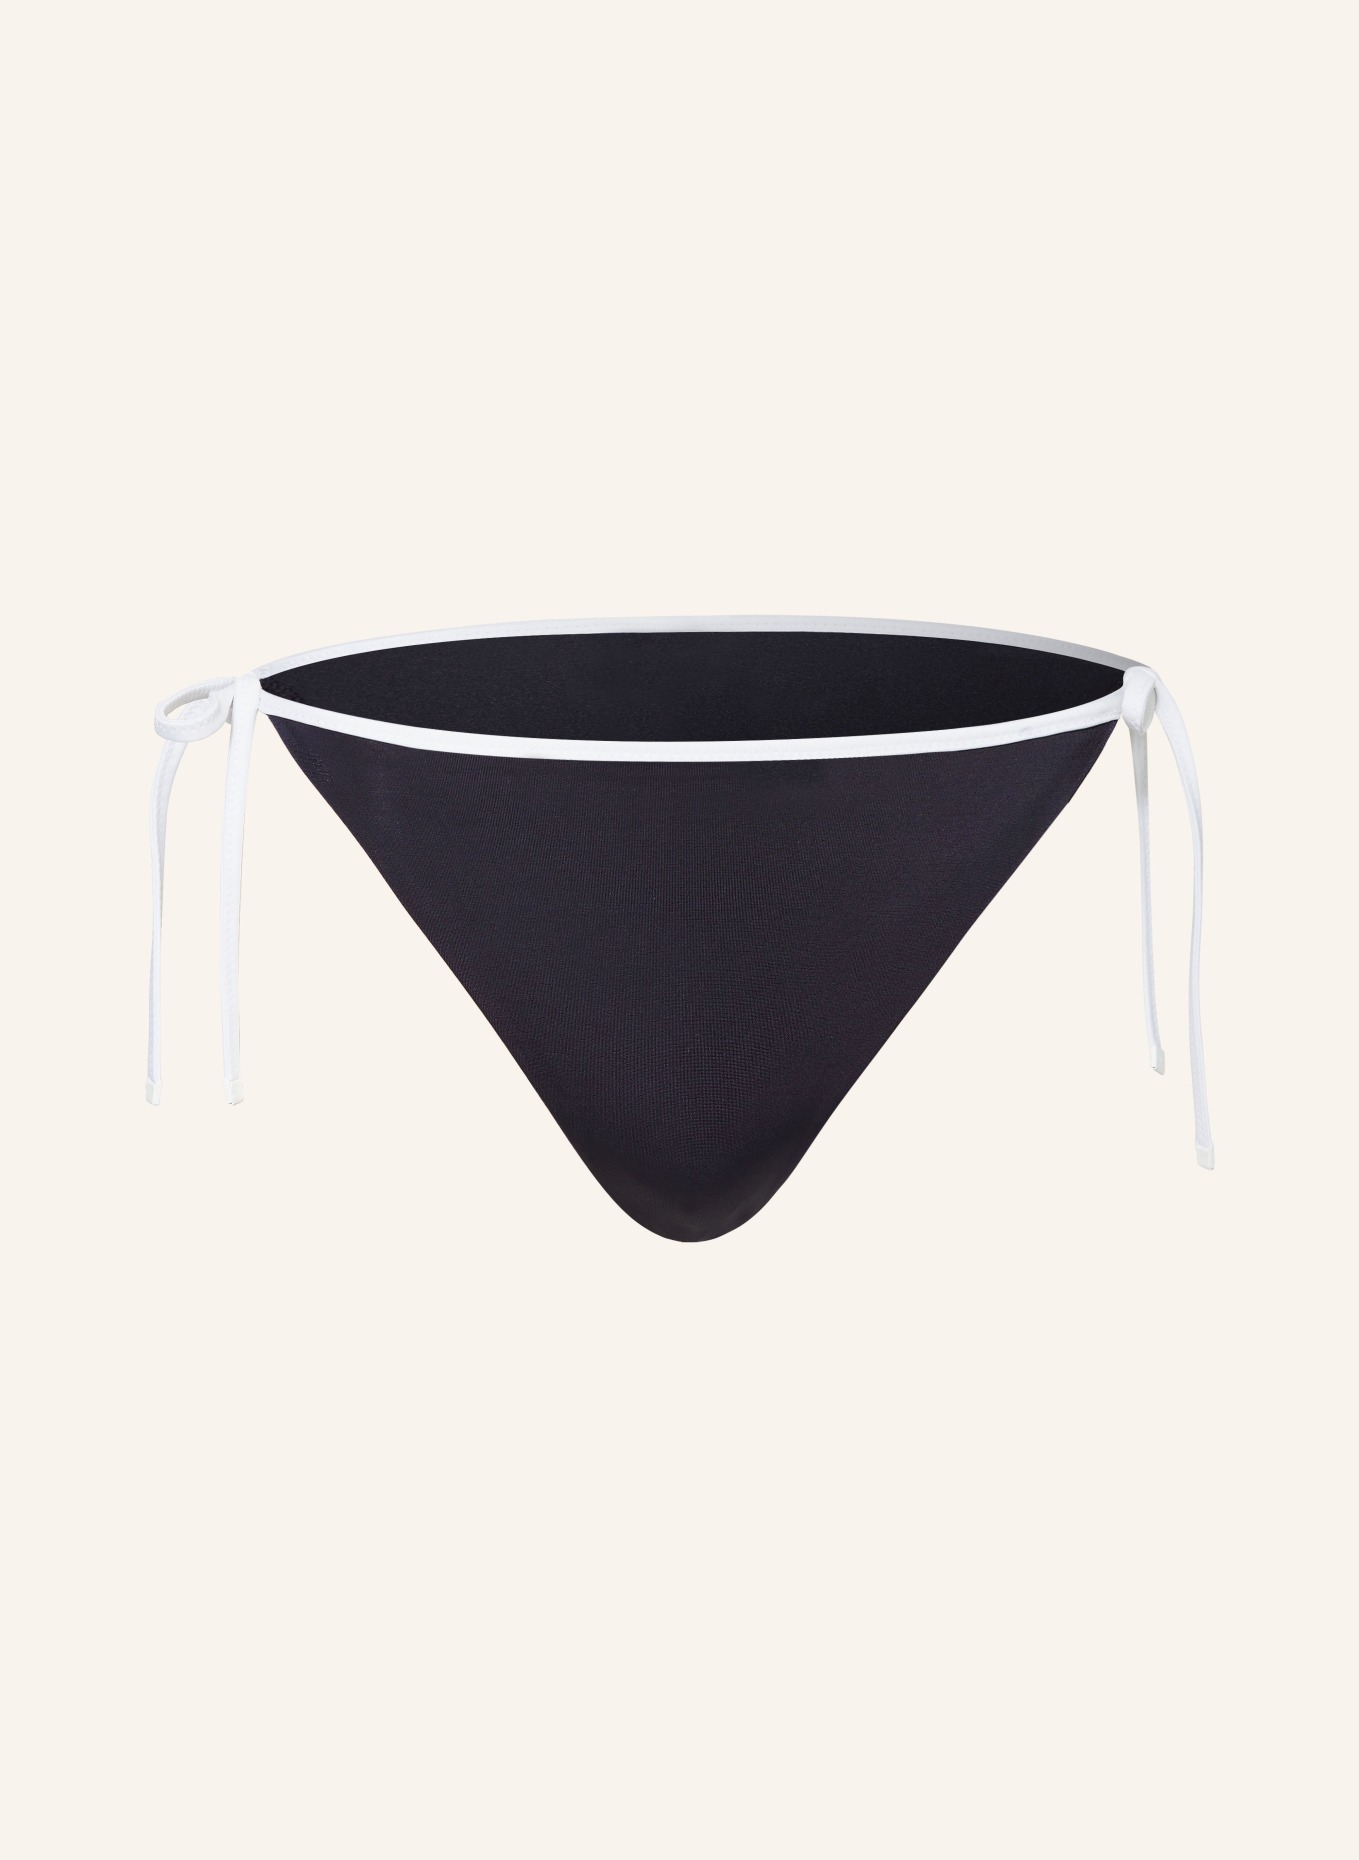 TOMMY HILFIGER Triangel-Bikini-Hose, Farbe: DUNKELBLAU (Bild 1)